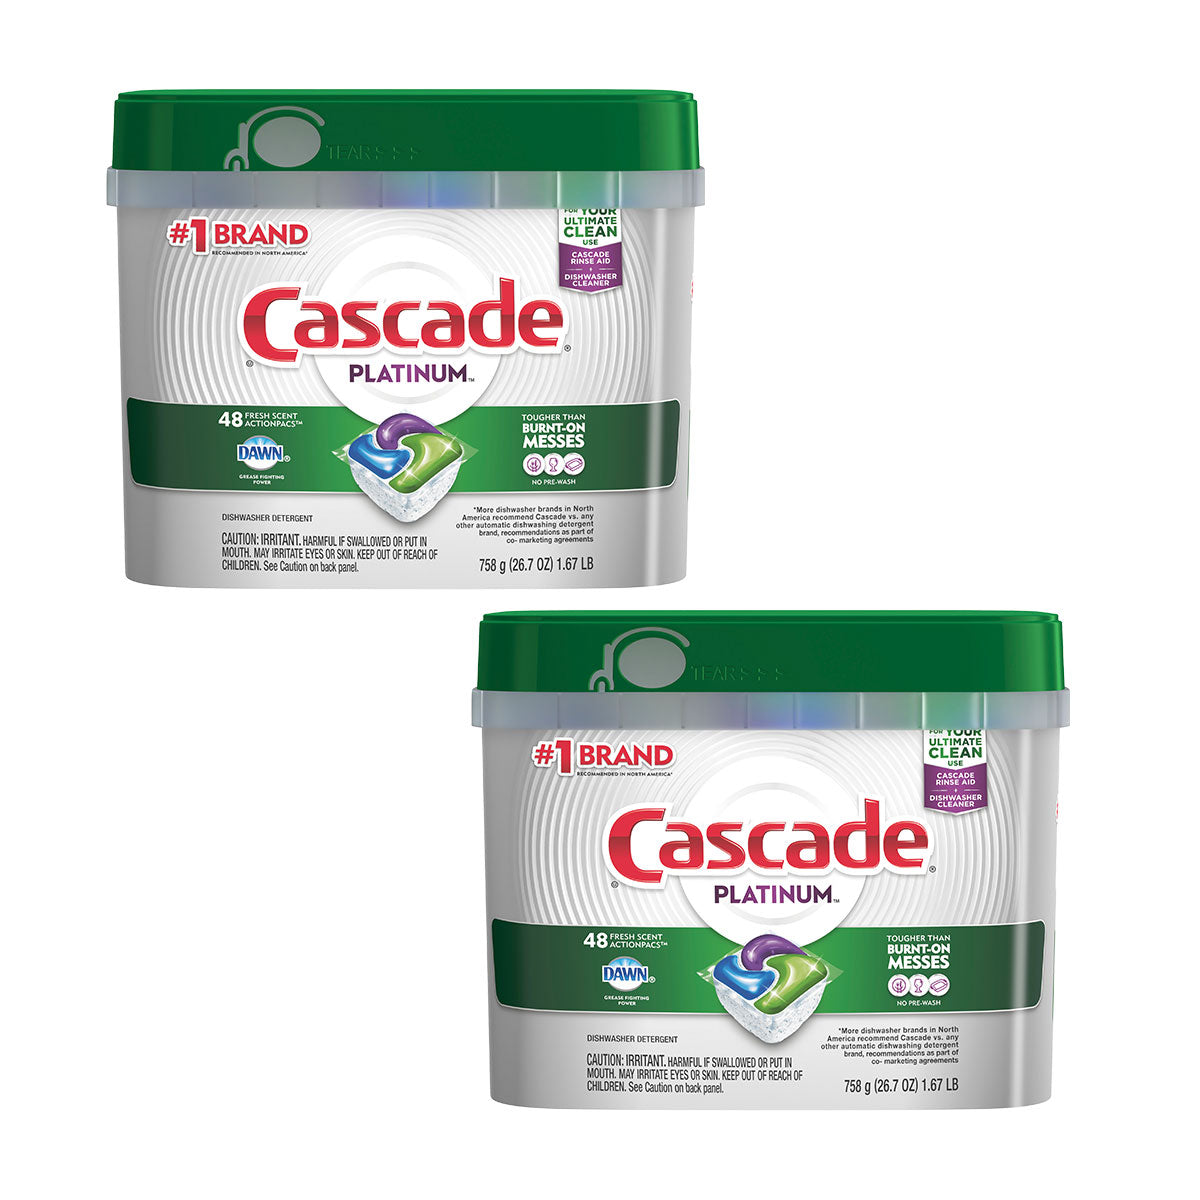 Pack Detergente lavavajillas Cascade Platinum (48 cápsulas ActionPacs) 2x $33.990